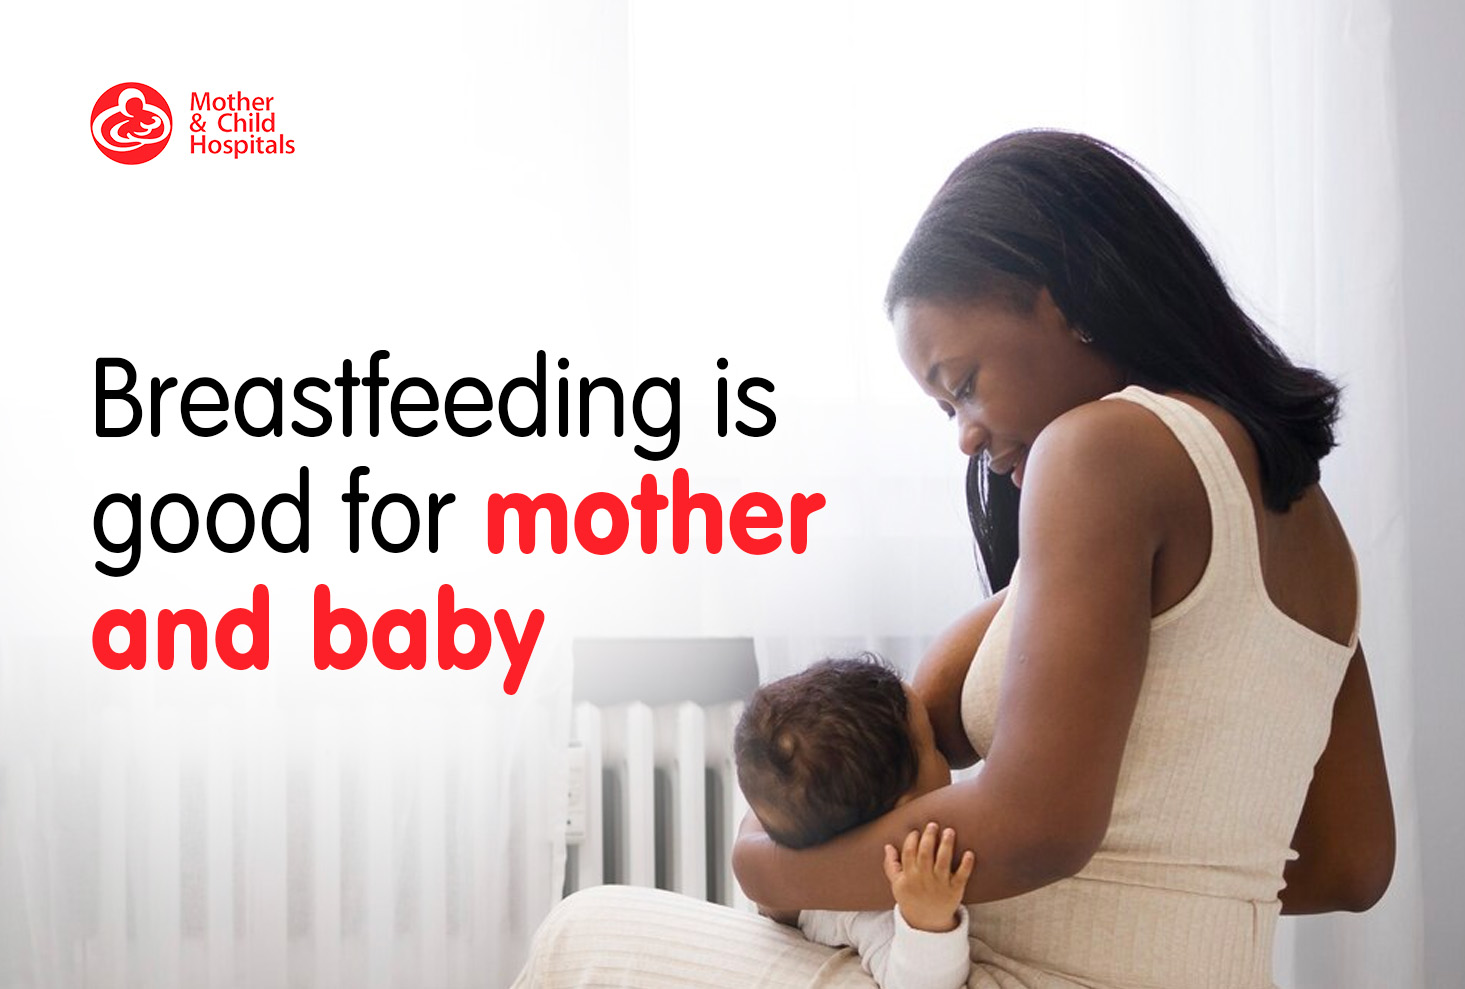 breastfeeding is important